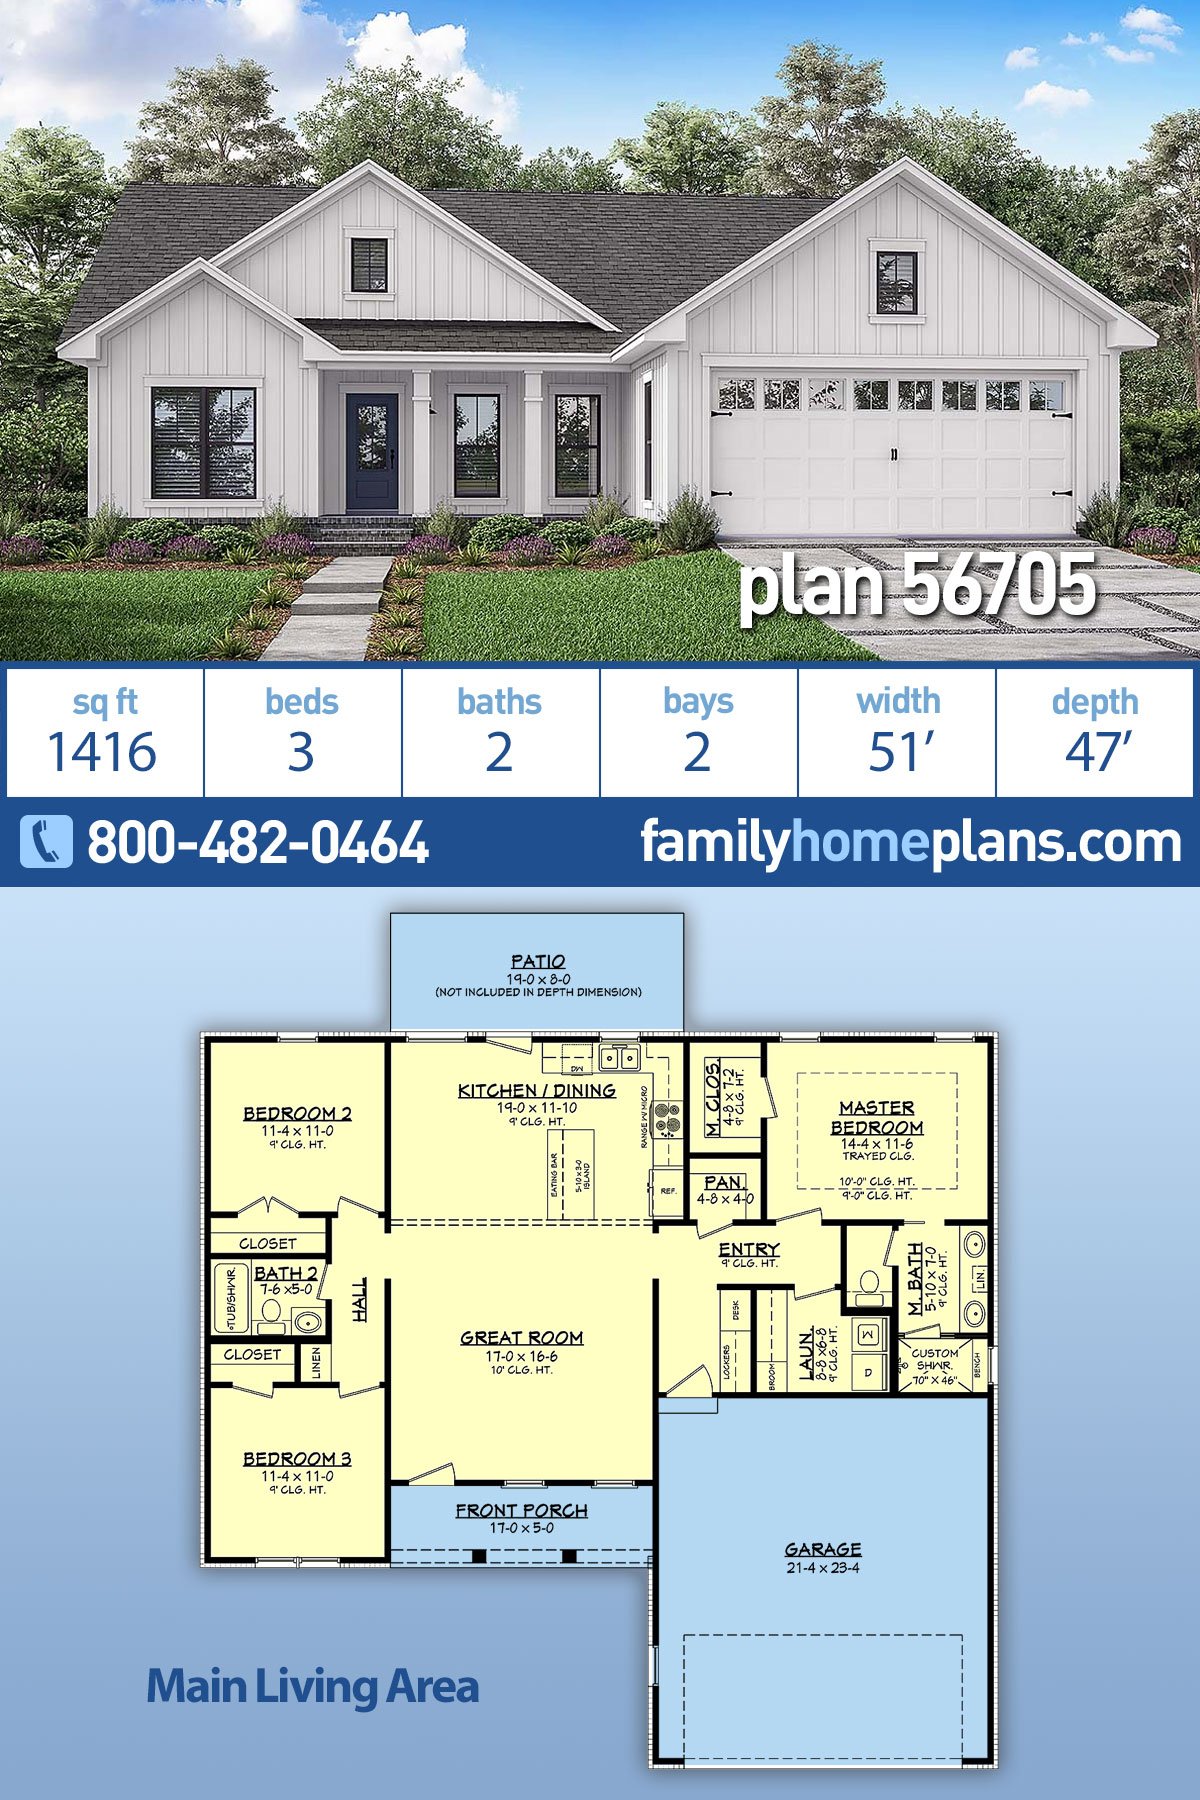 House Plan 56705